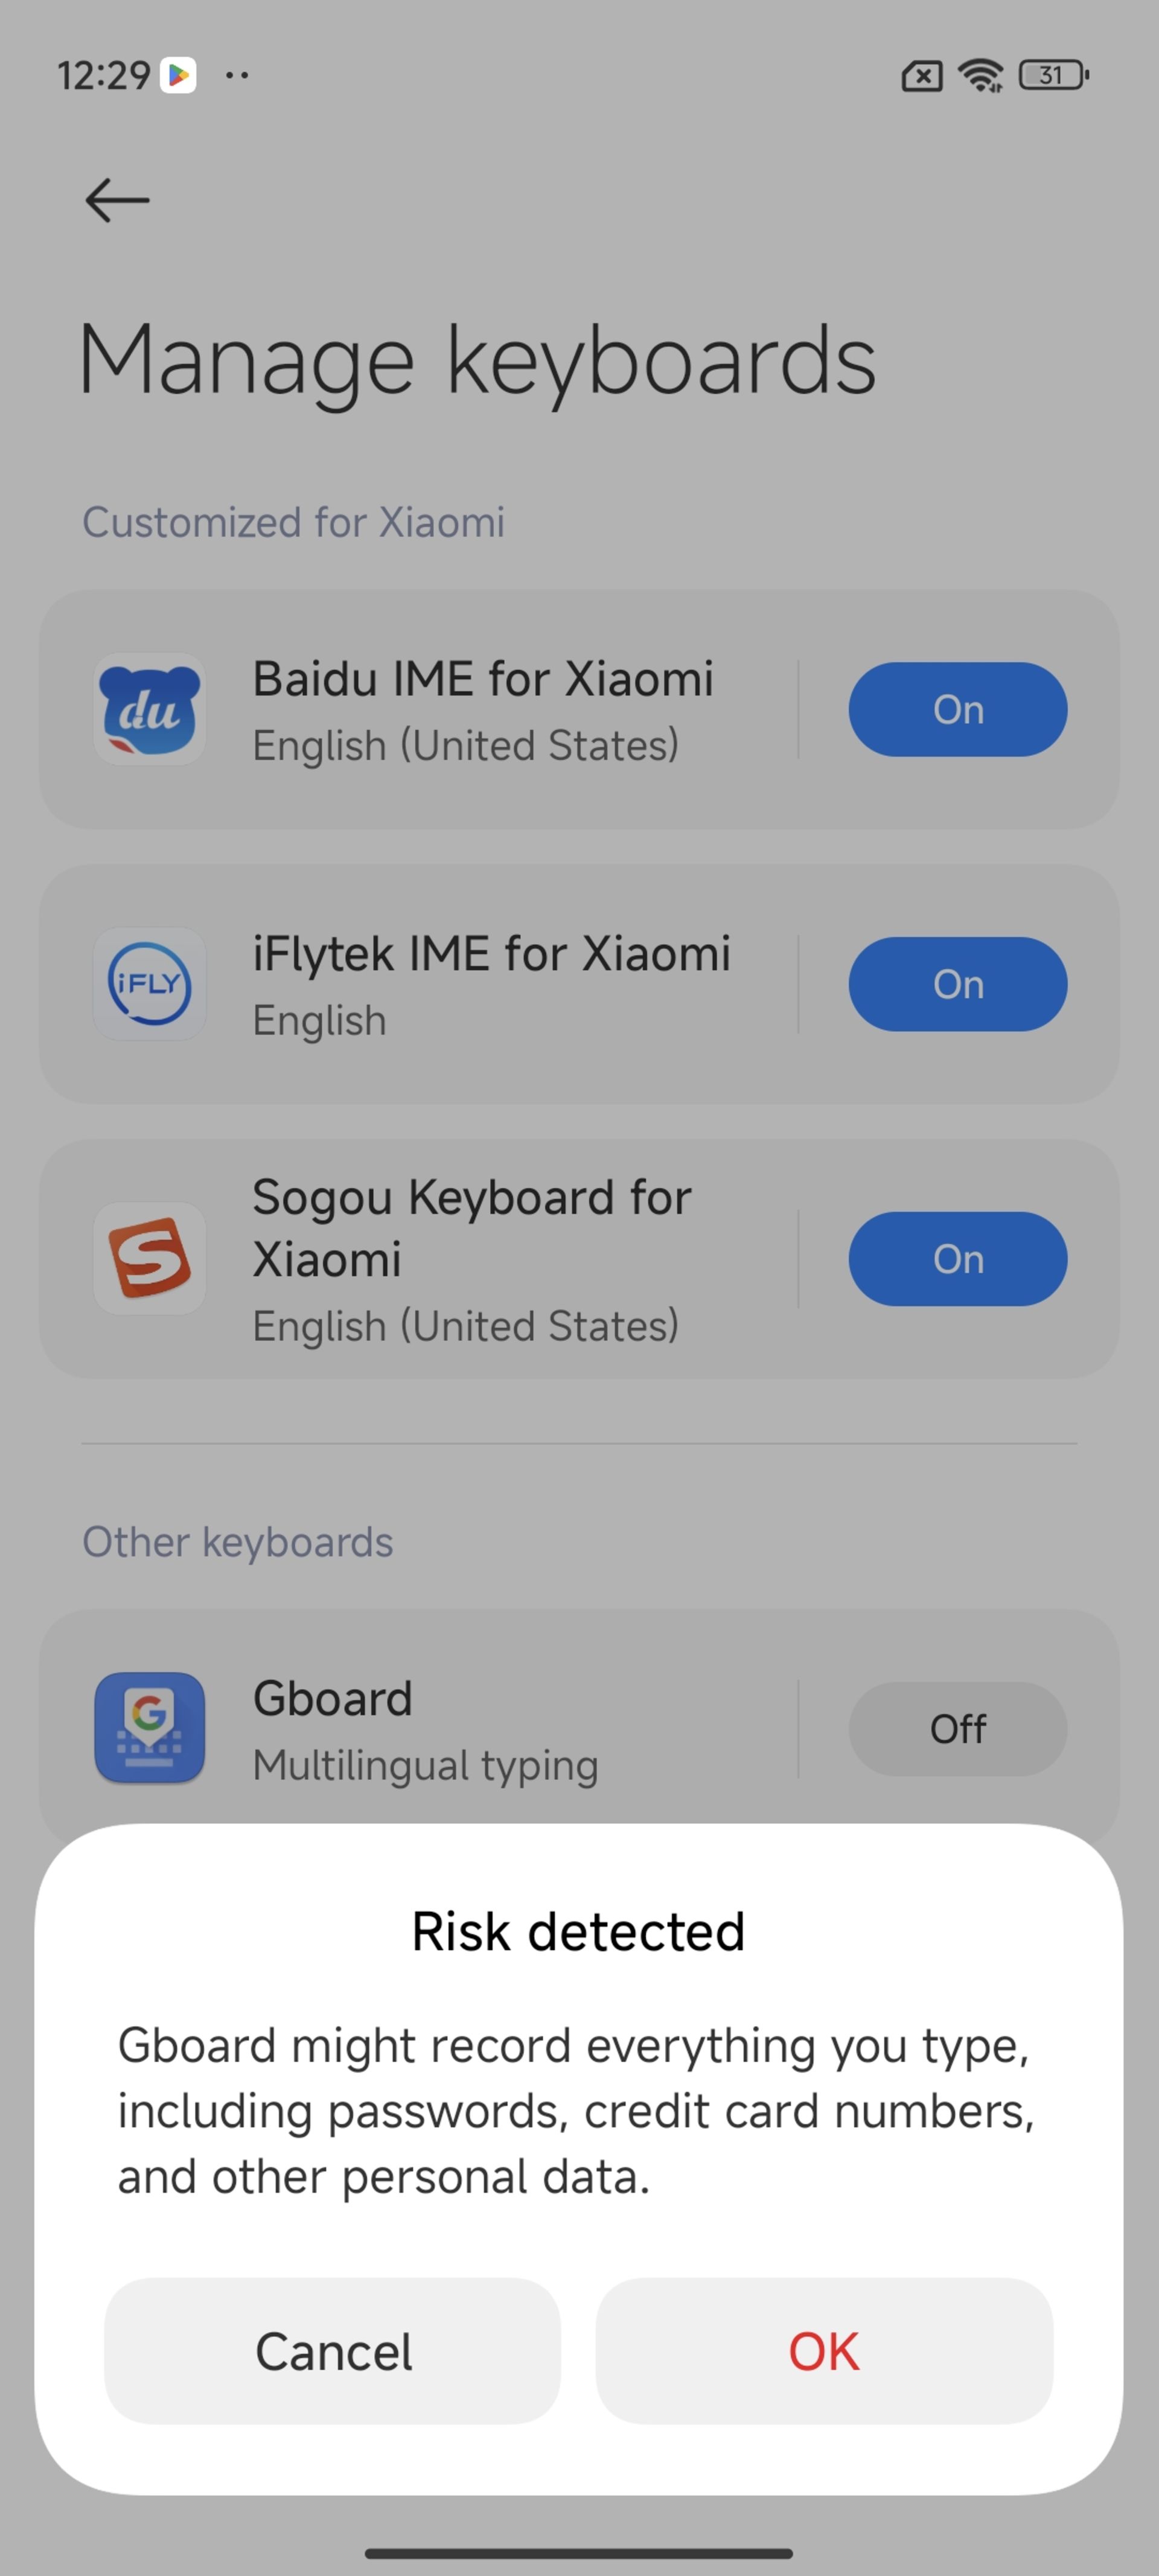 اخطار نصب GBoard در نسخه چینی HyperOS